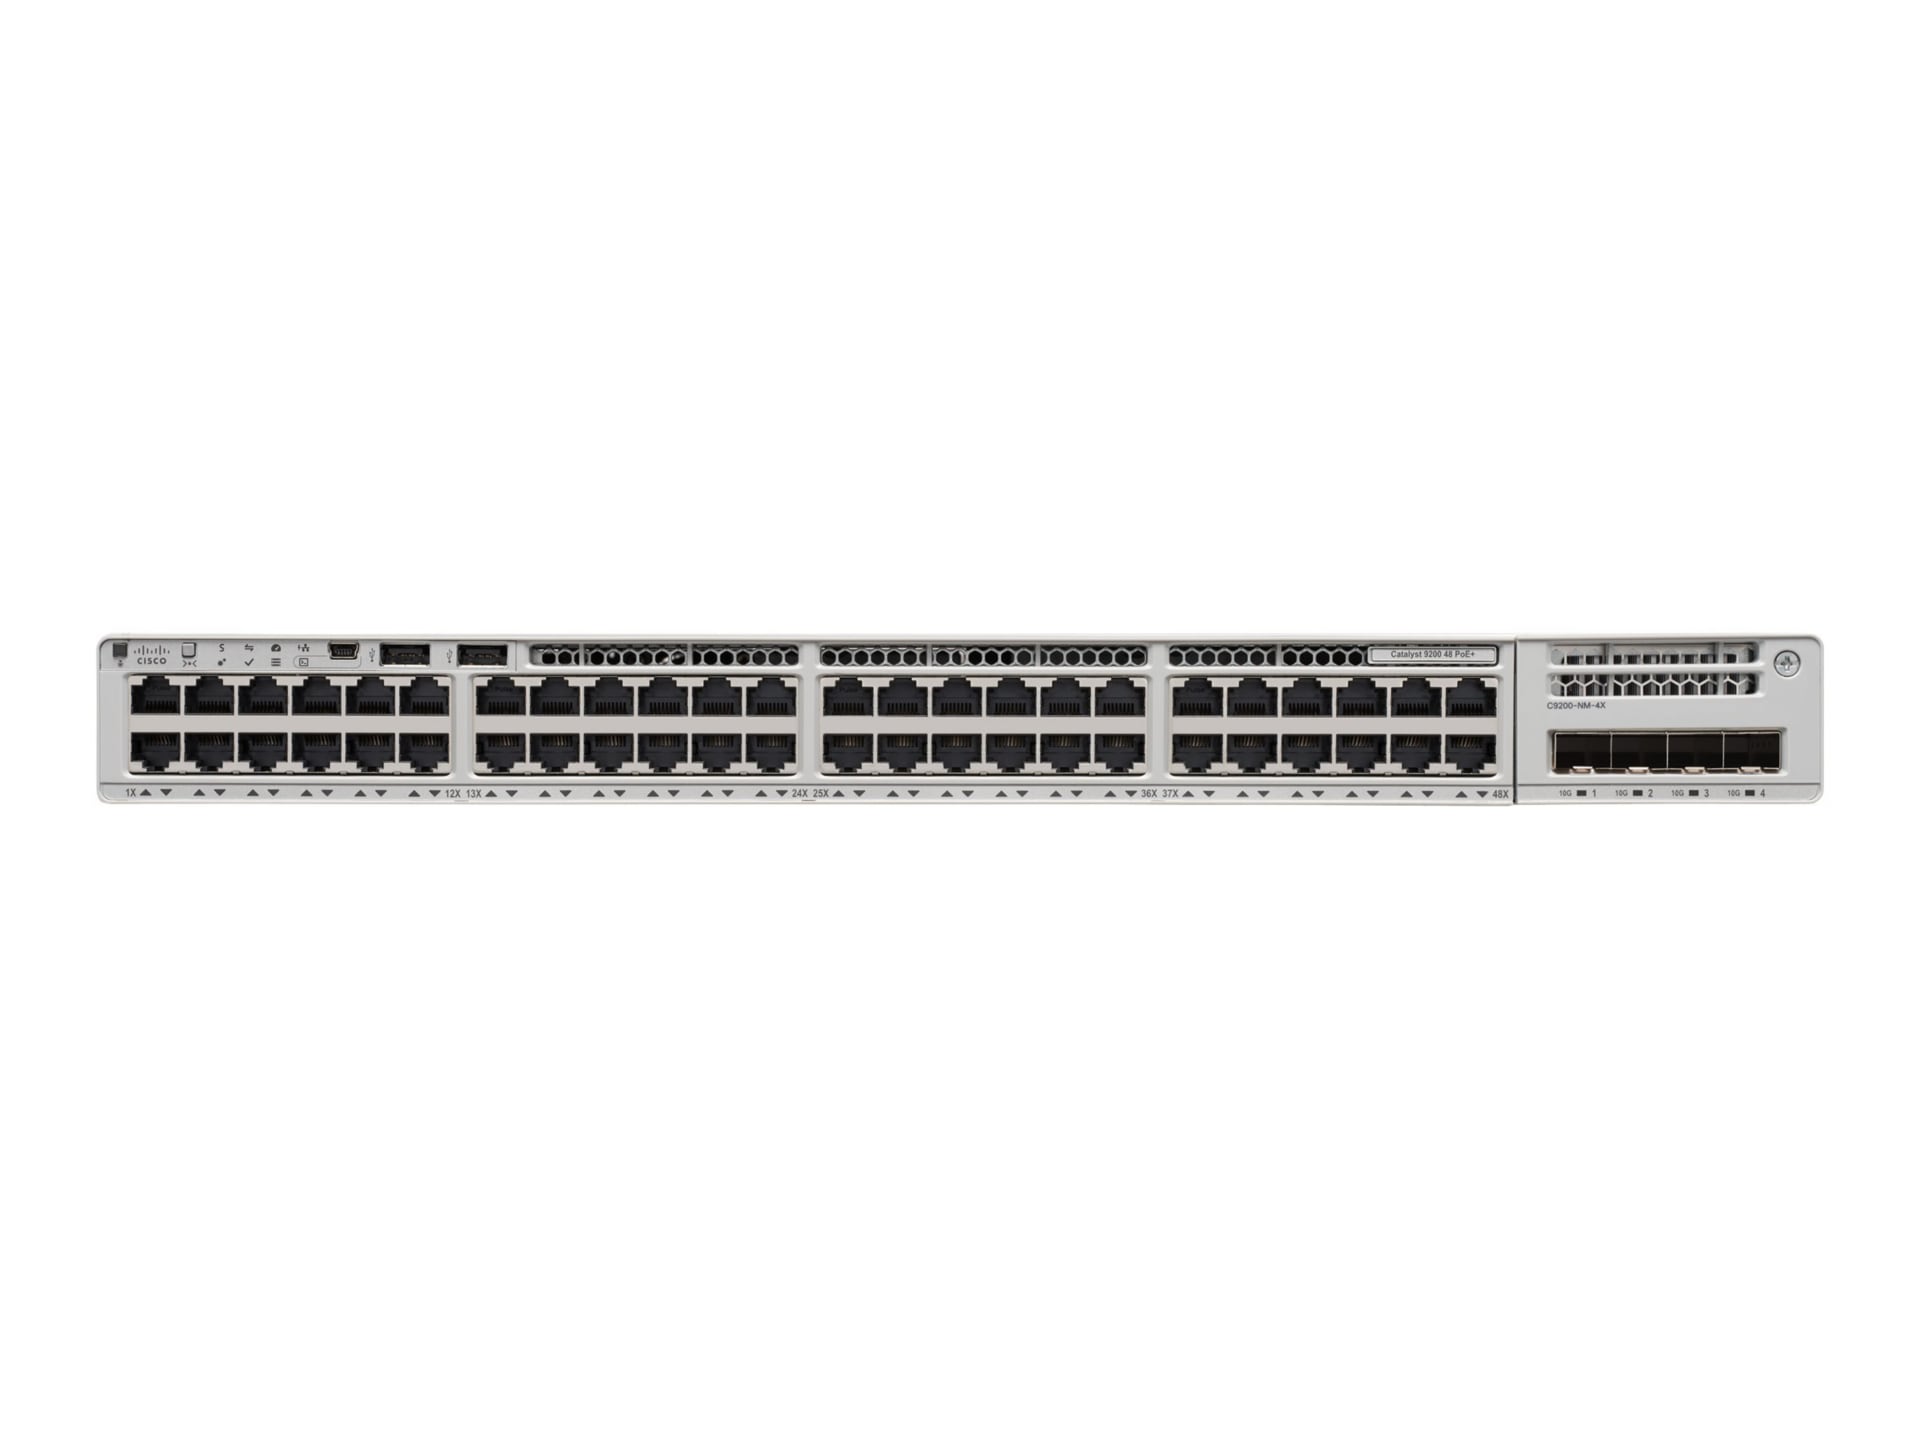 Cisco Catalyst 9200 - Essential Edition - switch - 48 ports - smart - rack-